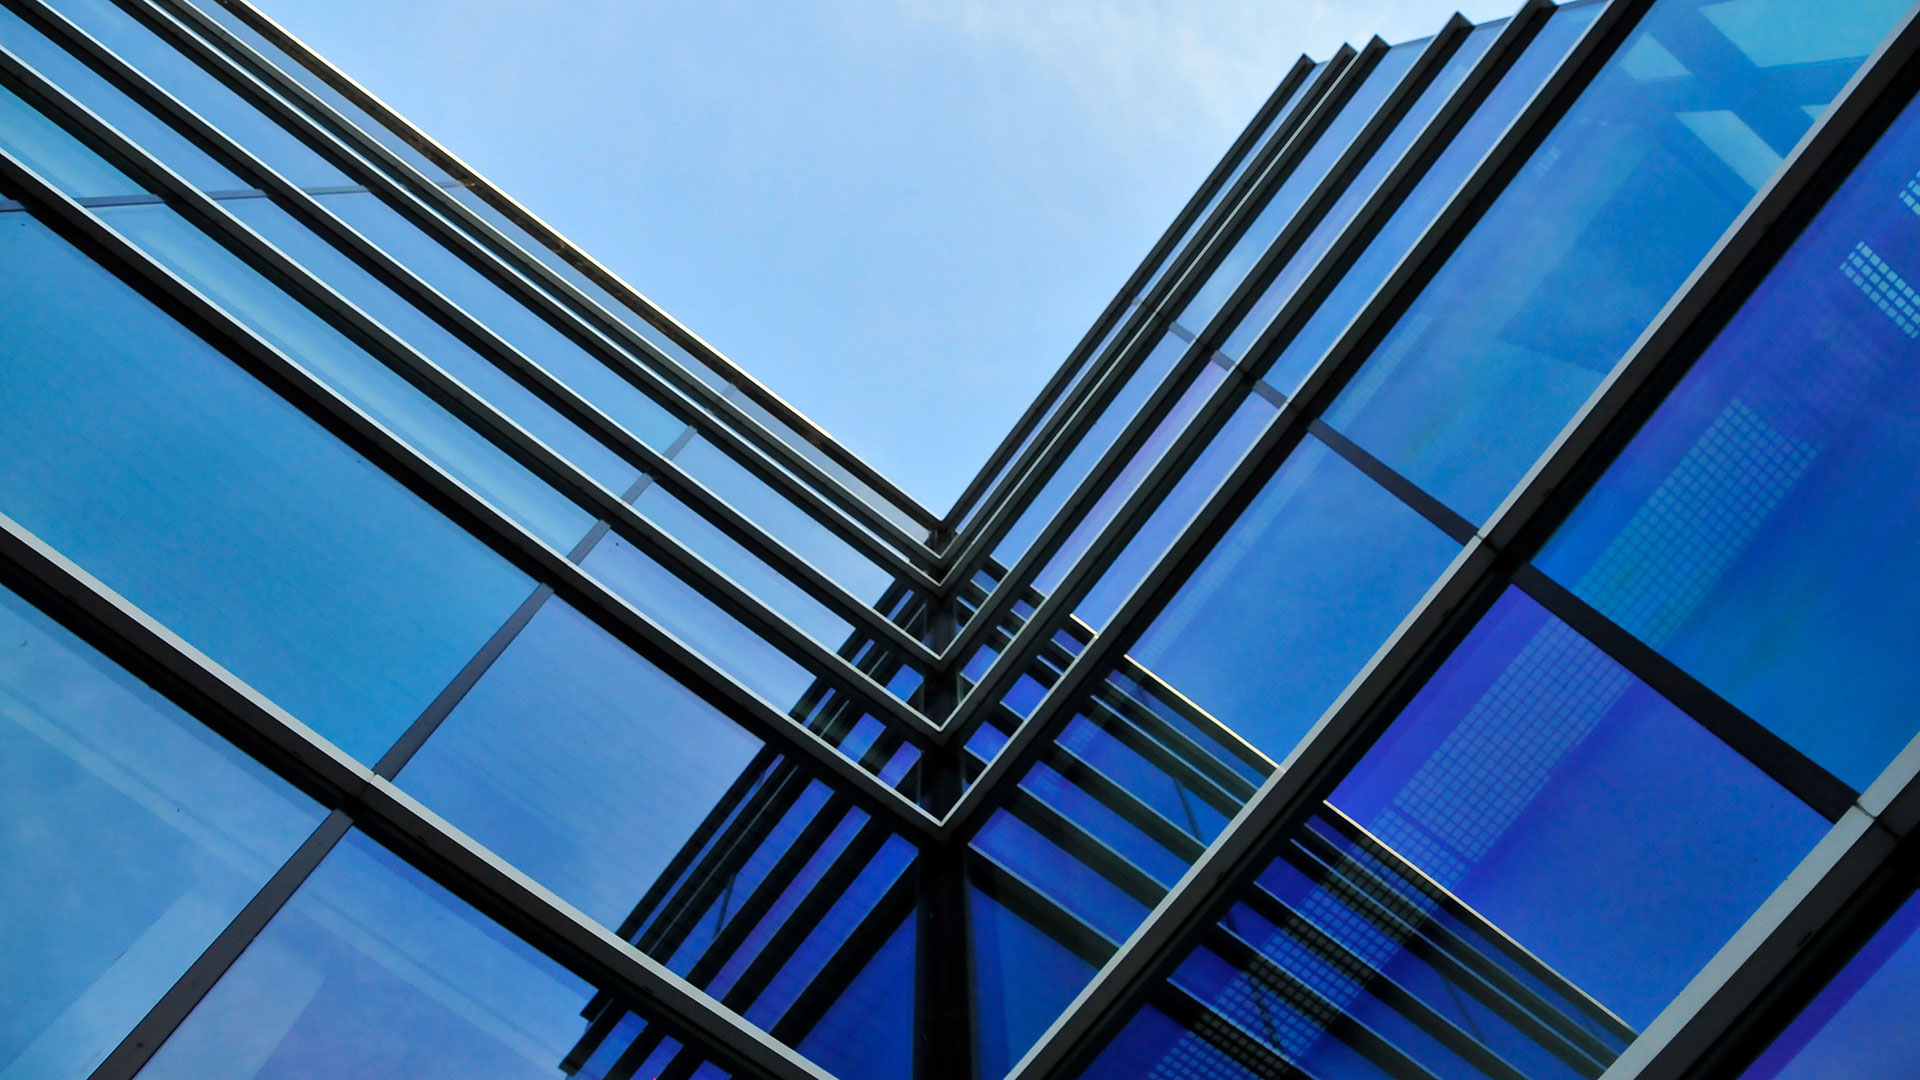 glass facade skyscraper with blue electrochromic glass